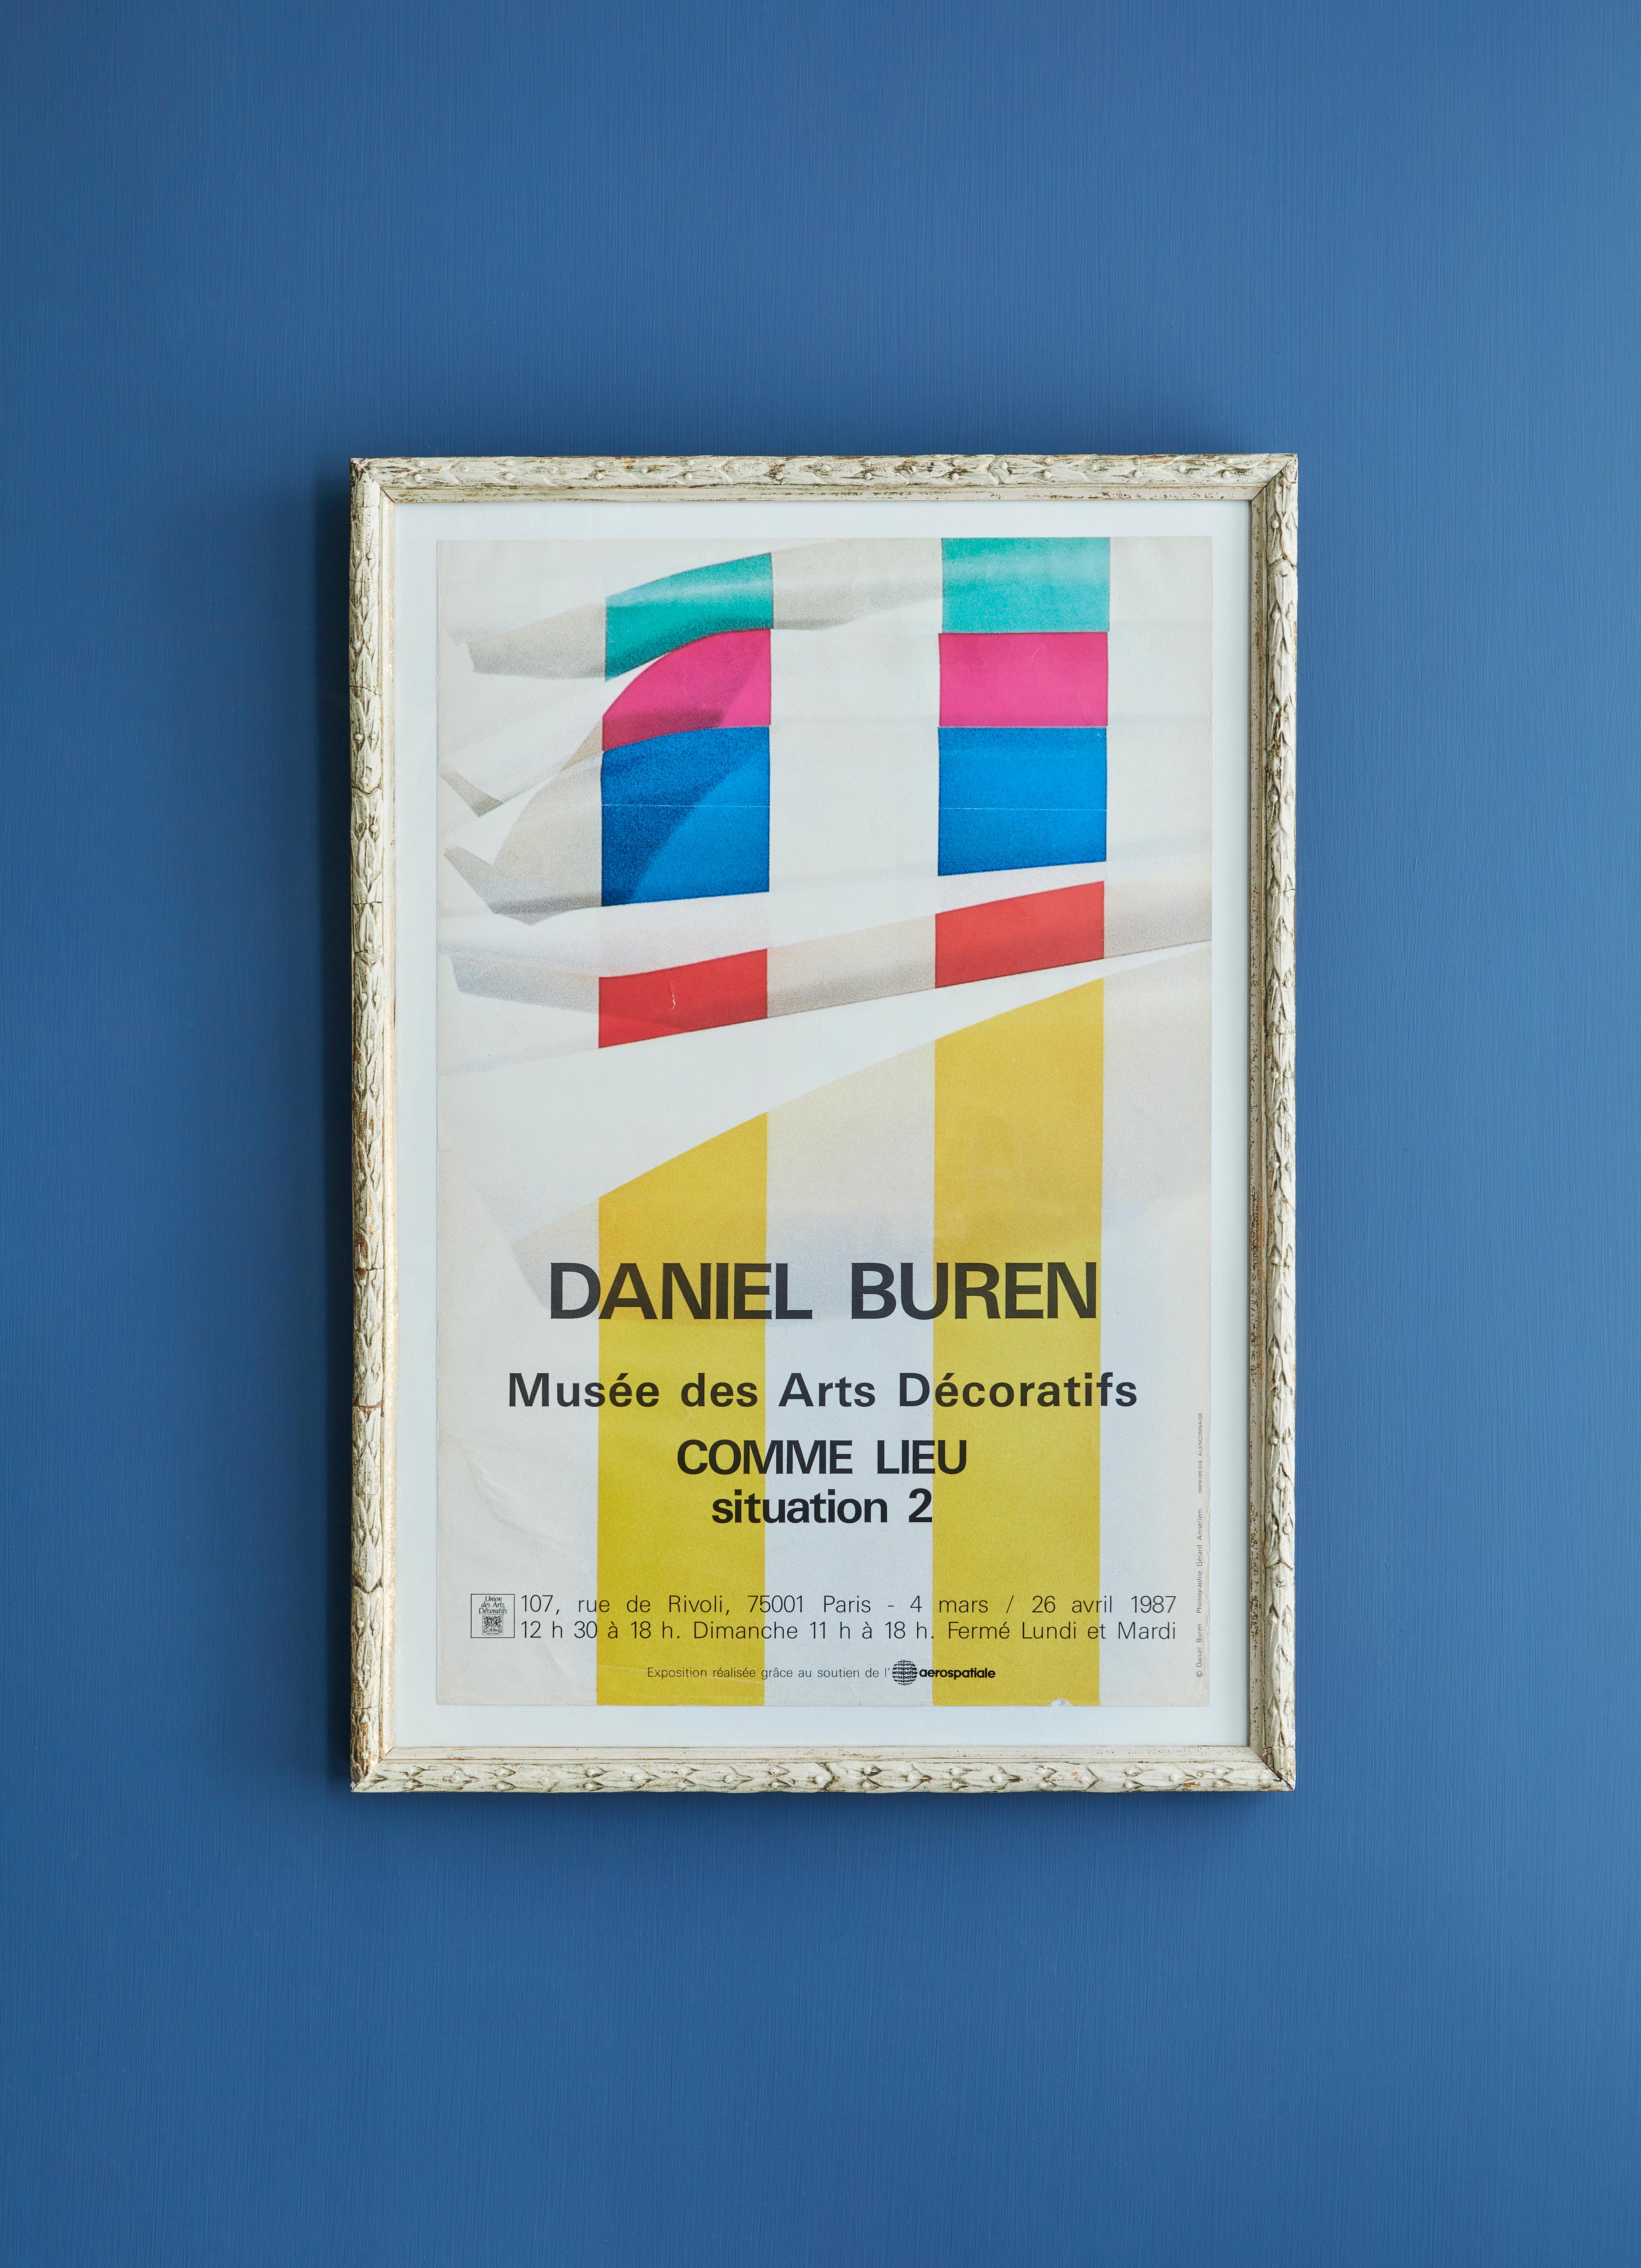 Daniel Buren,
France, 1987 

Rare poster made on the occasion of Daniel Buren's exhibition 